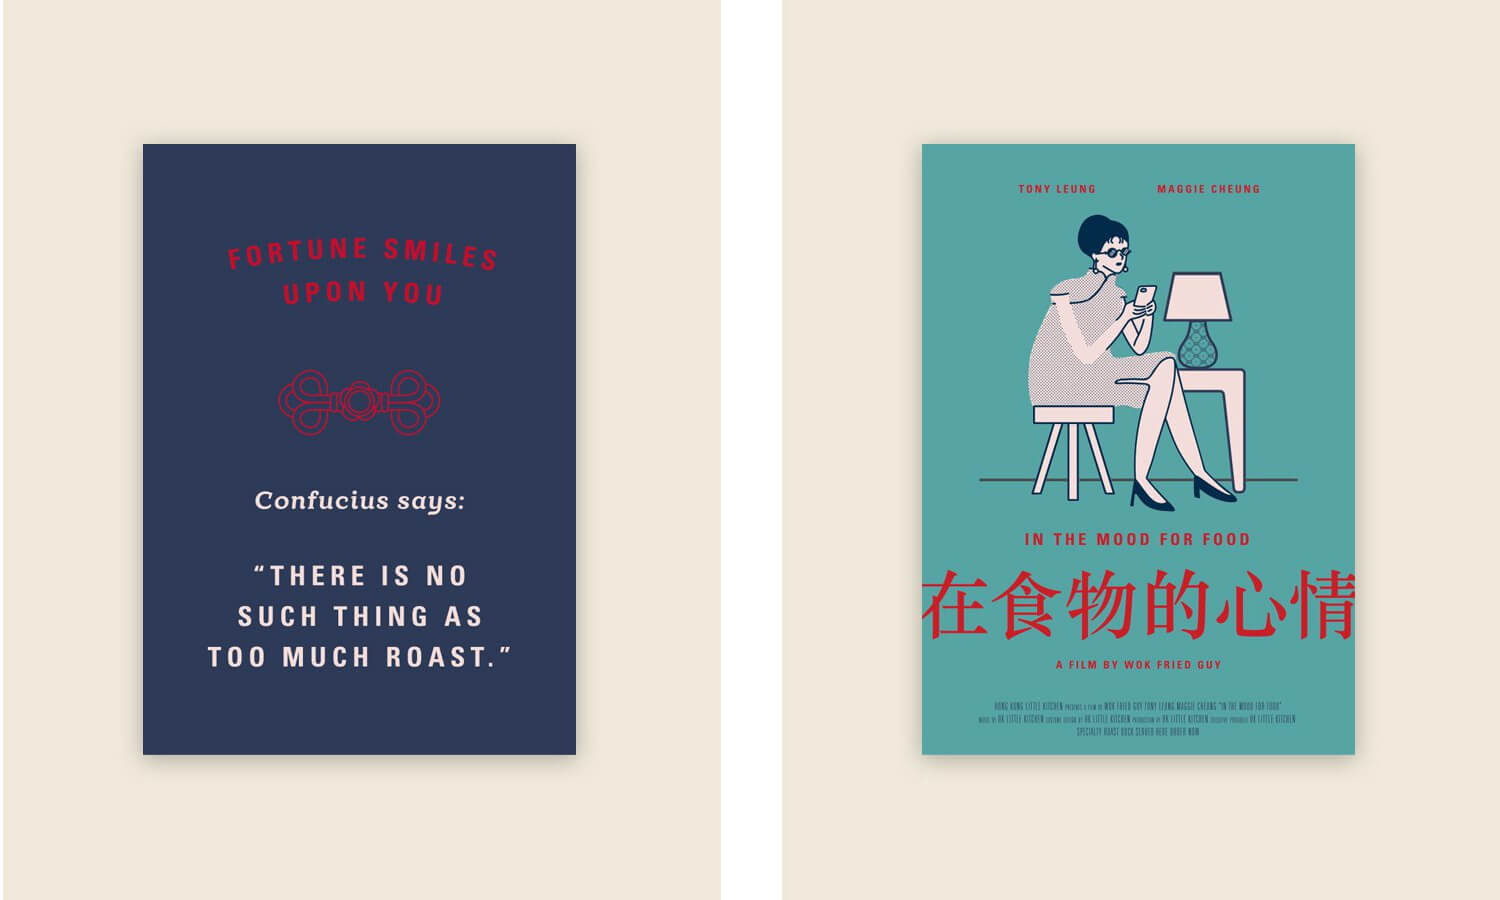 Movie poster illustration and design for food and beverage brand Hong Kong Little Kitchen